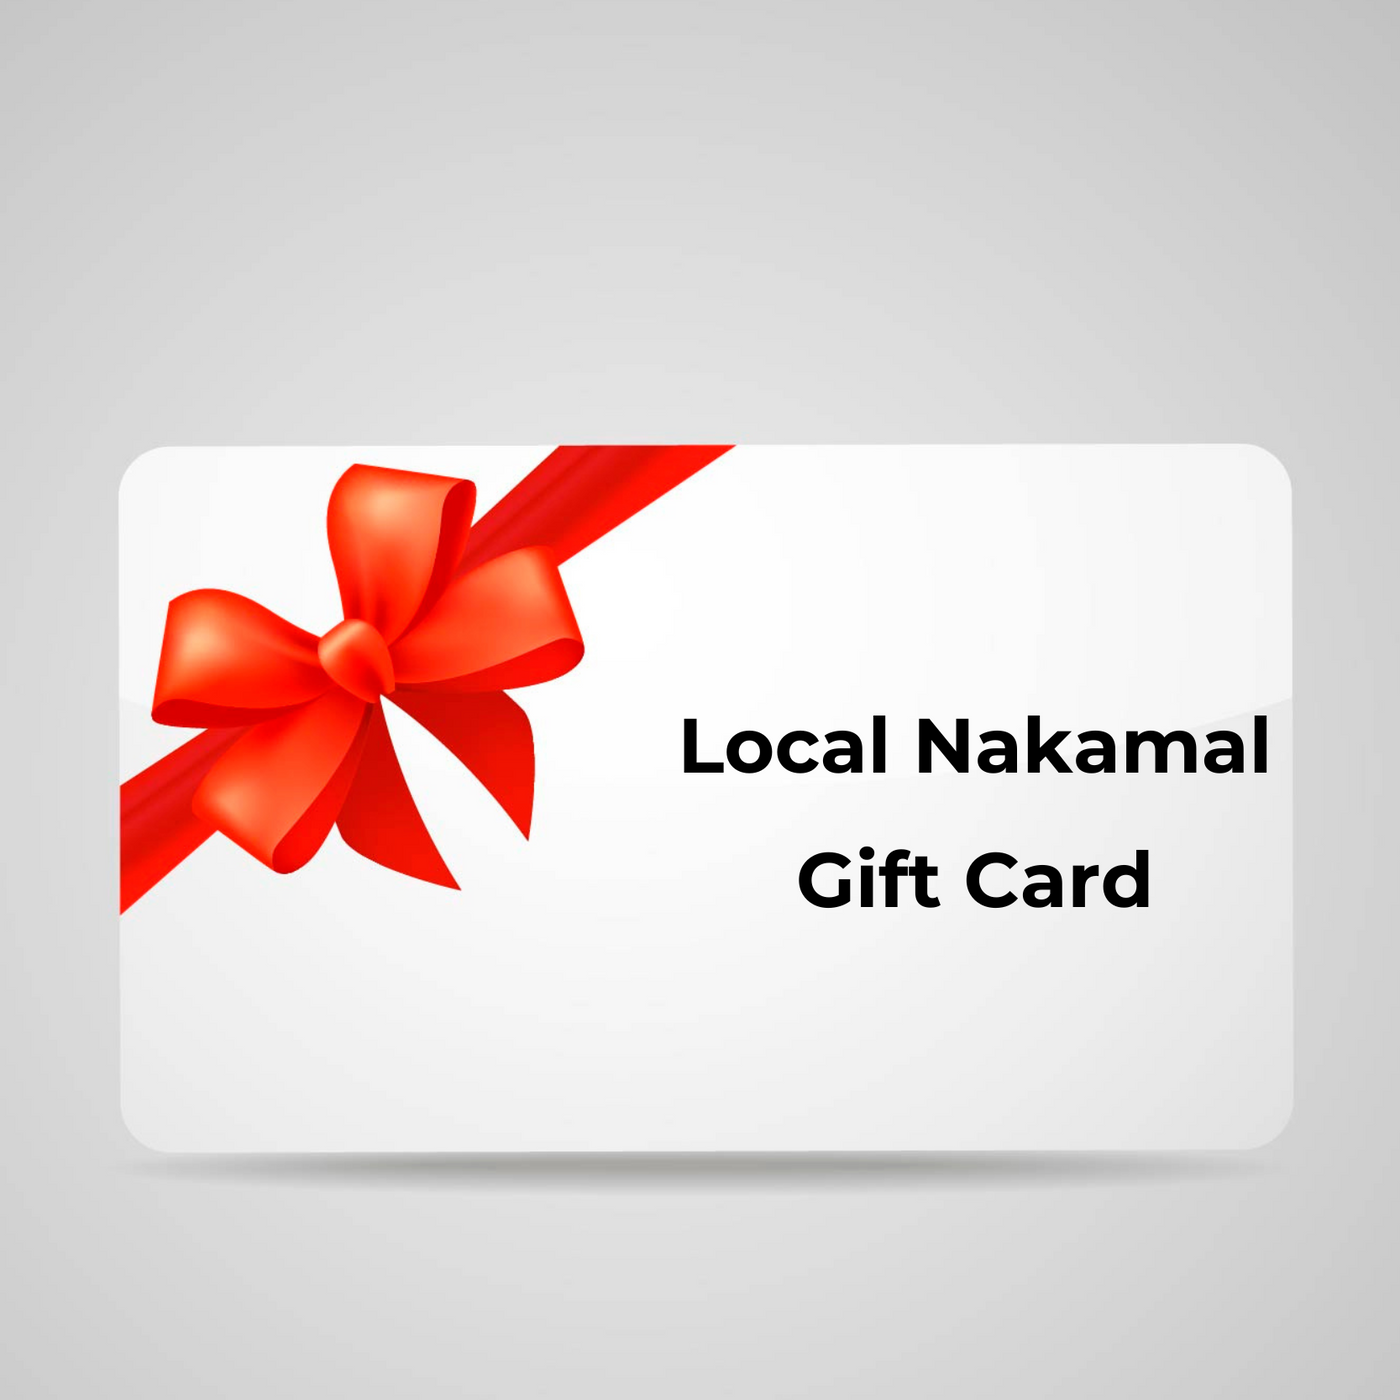 Local Nakamal Gift Card